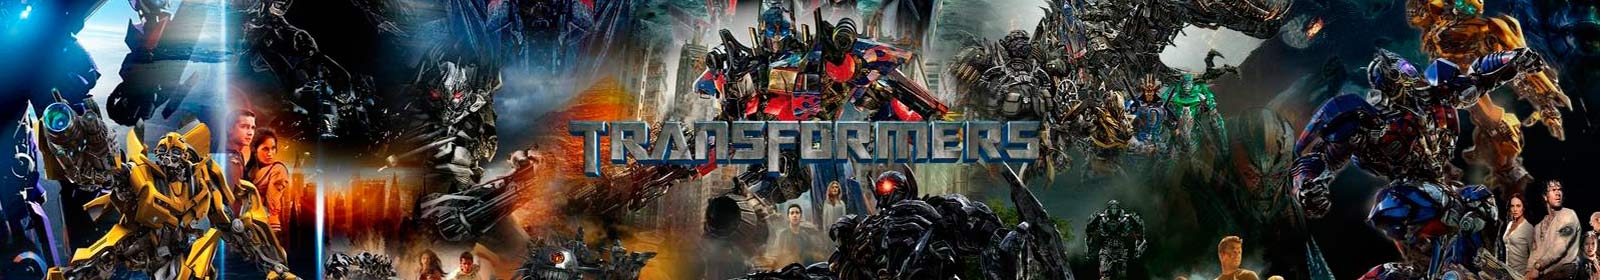 Comprar Transformers online